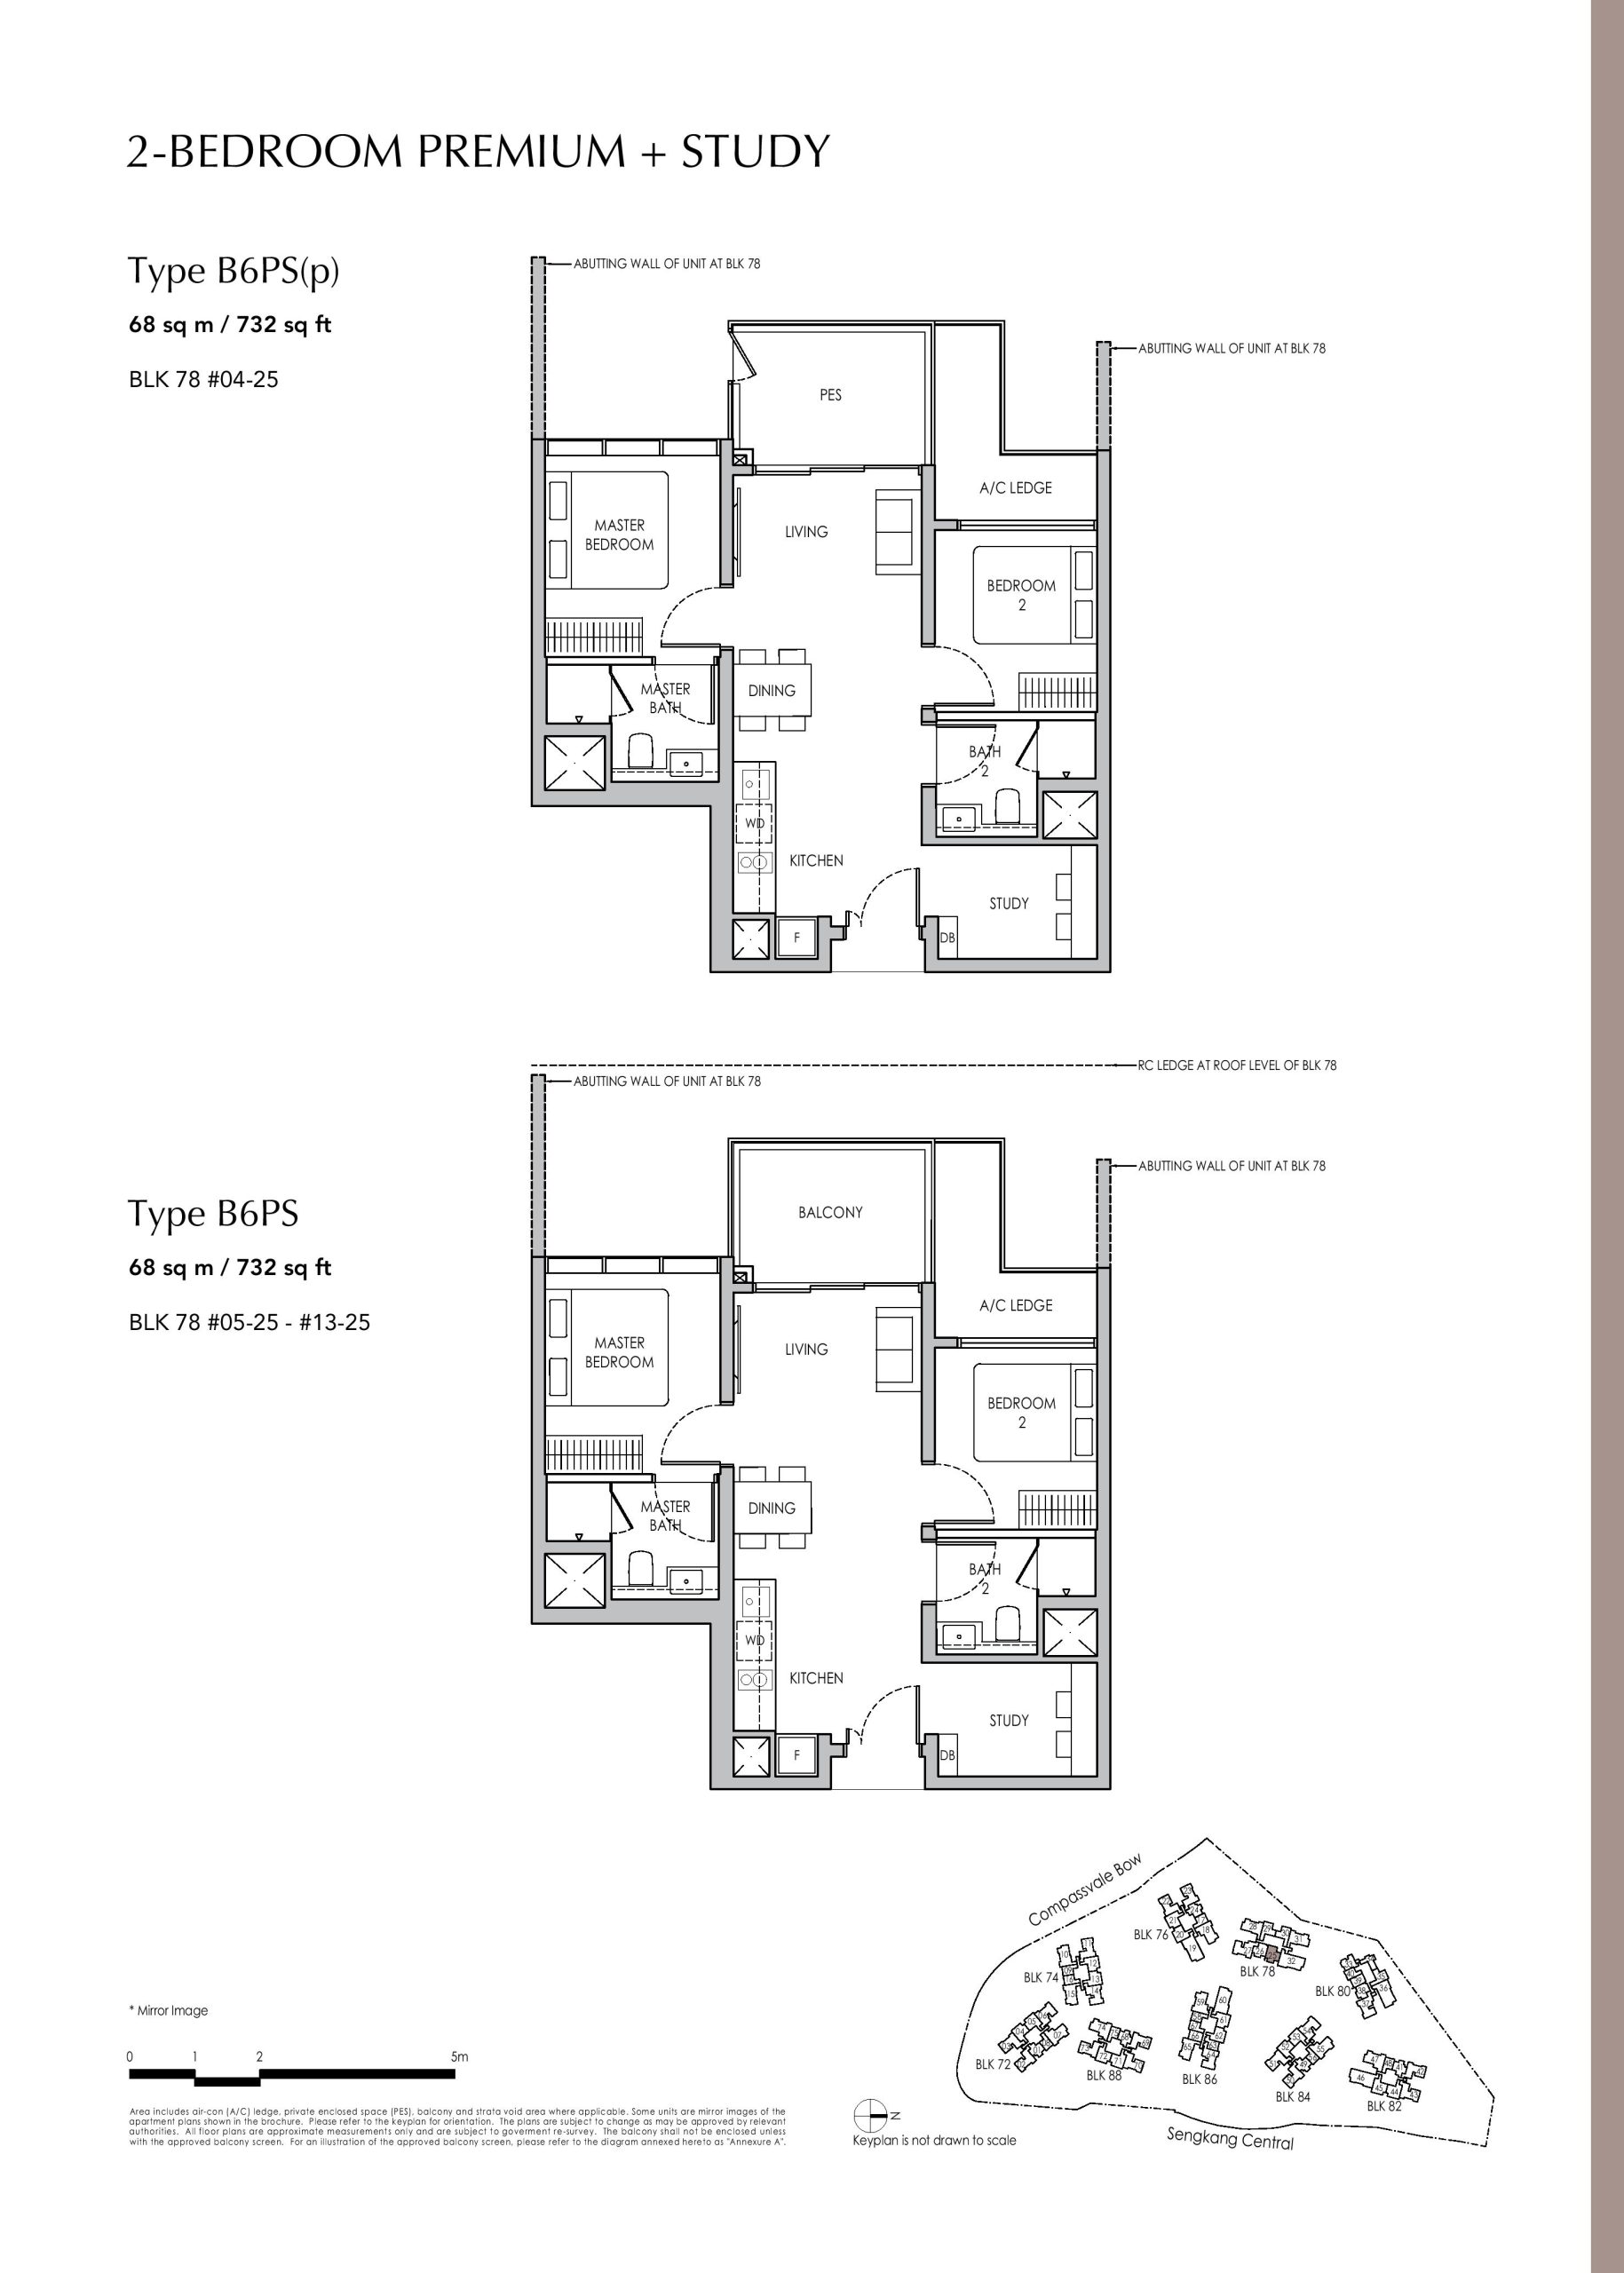 Sengkang Grand Residences 2 Bedroom Premium + Study Type B6PS(p), B6PS Floor Plans